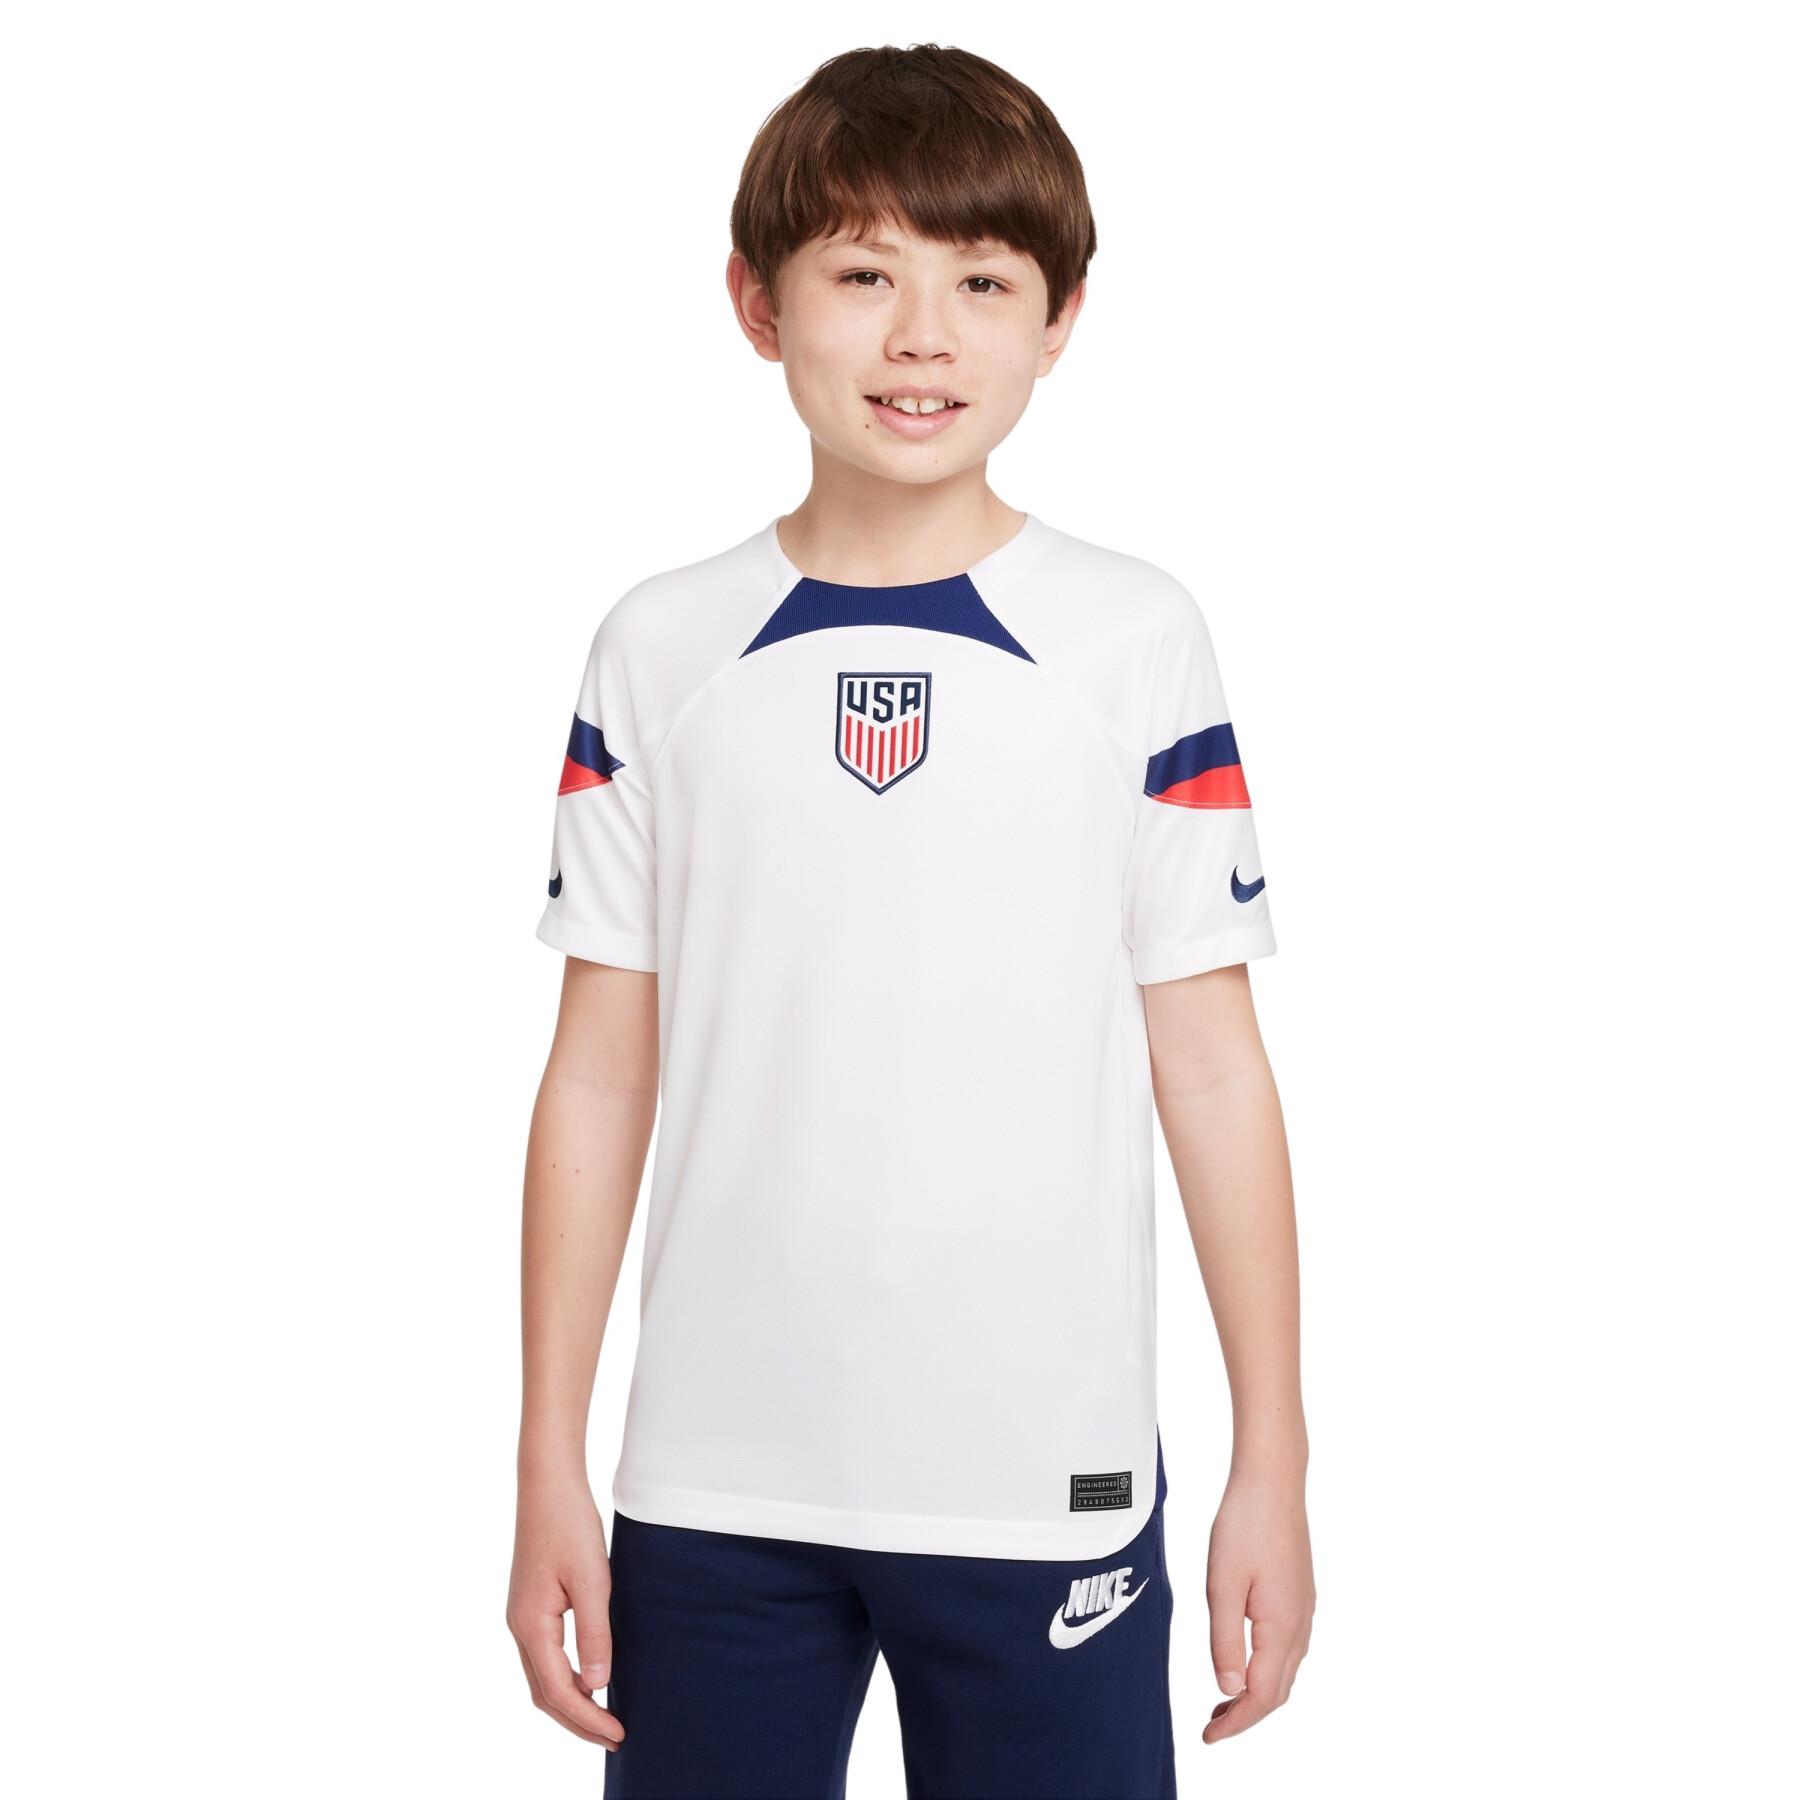 Camiseta local de niño de la Copa Mundial 2022 USA